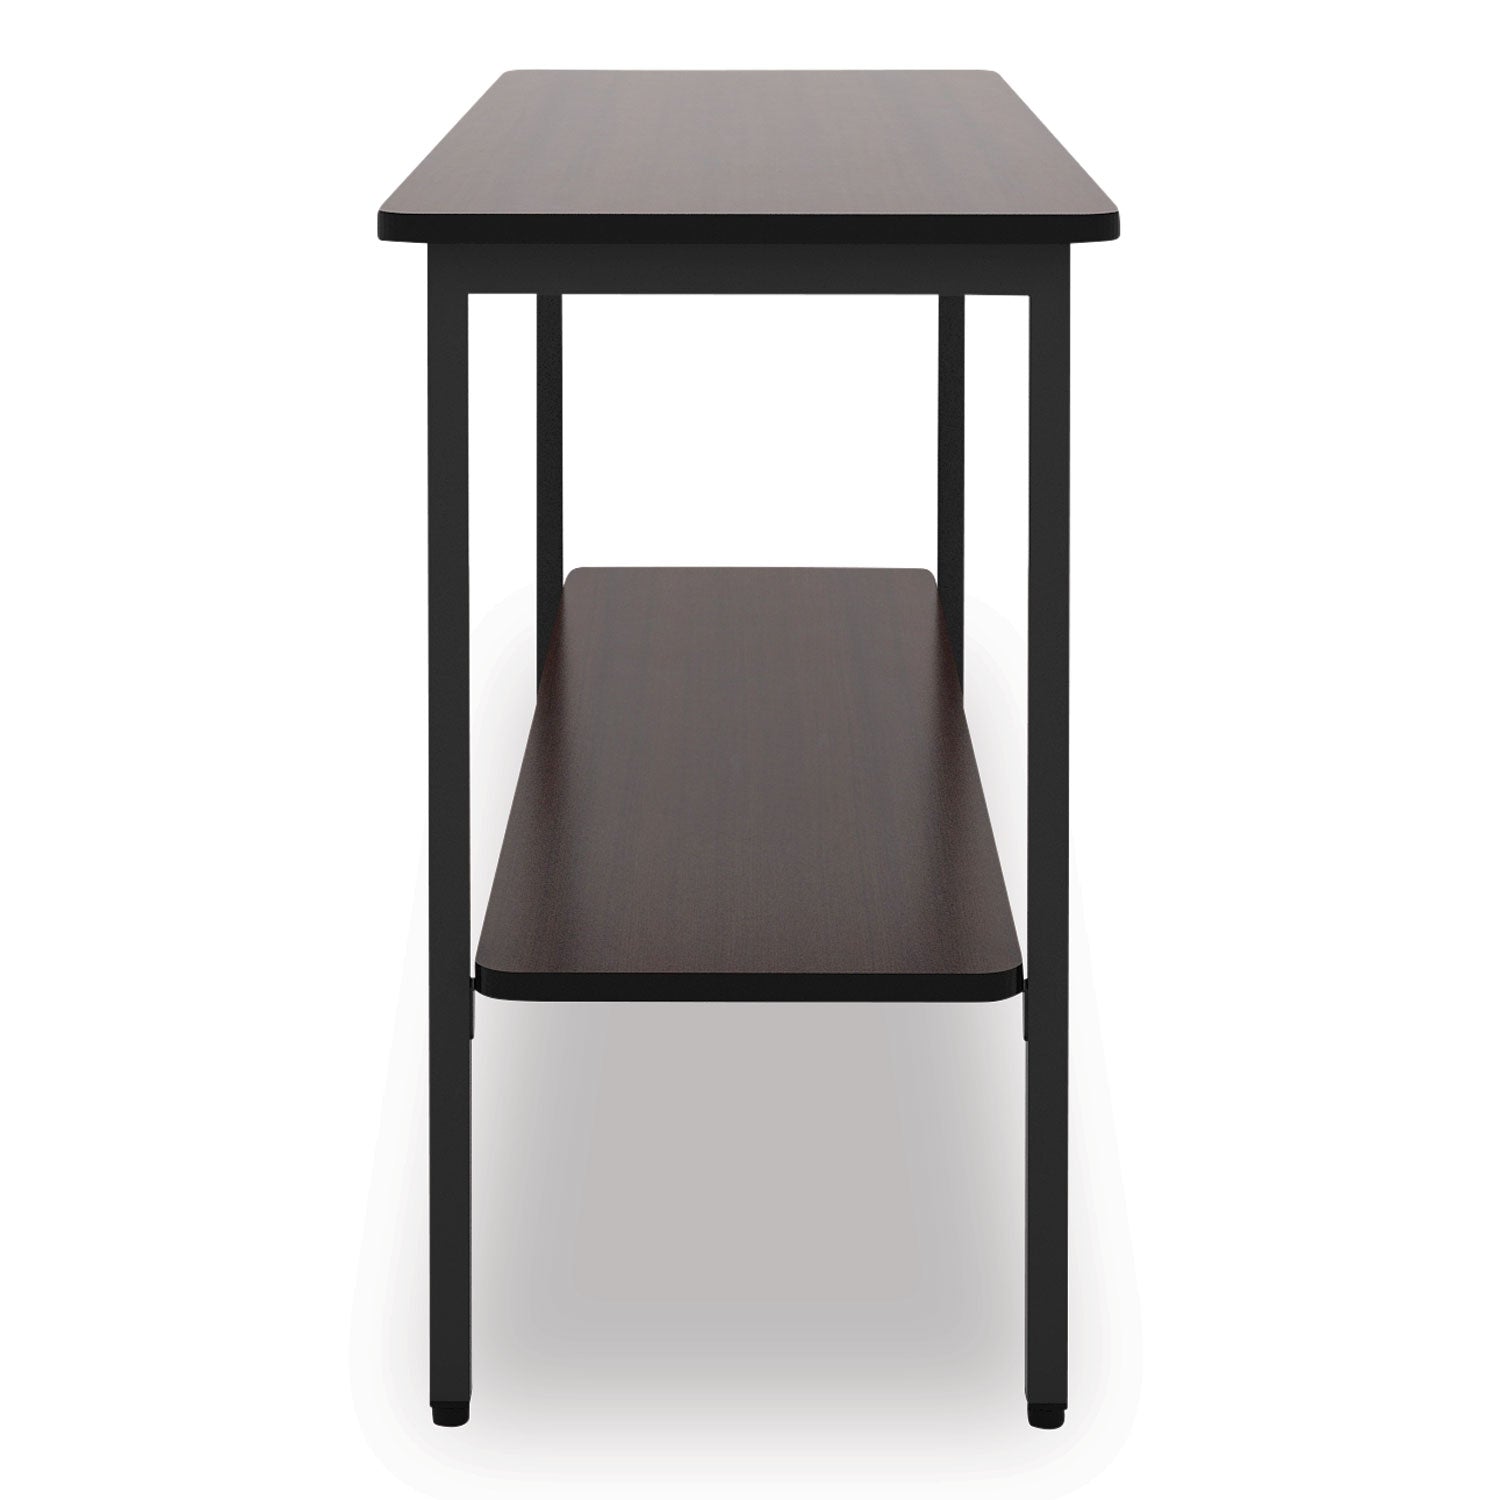 officeworks-one-shelf-utility-table-rectangular-4725-x-177-x-295-walnut-top-black-base-legs_ice69124 - 3